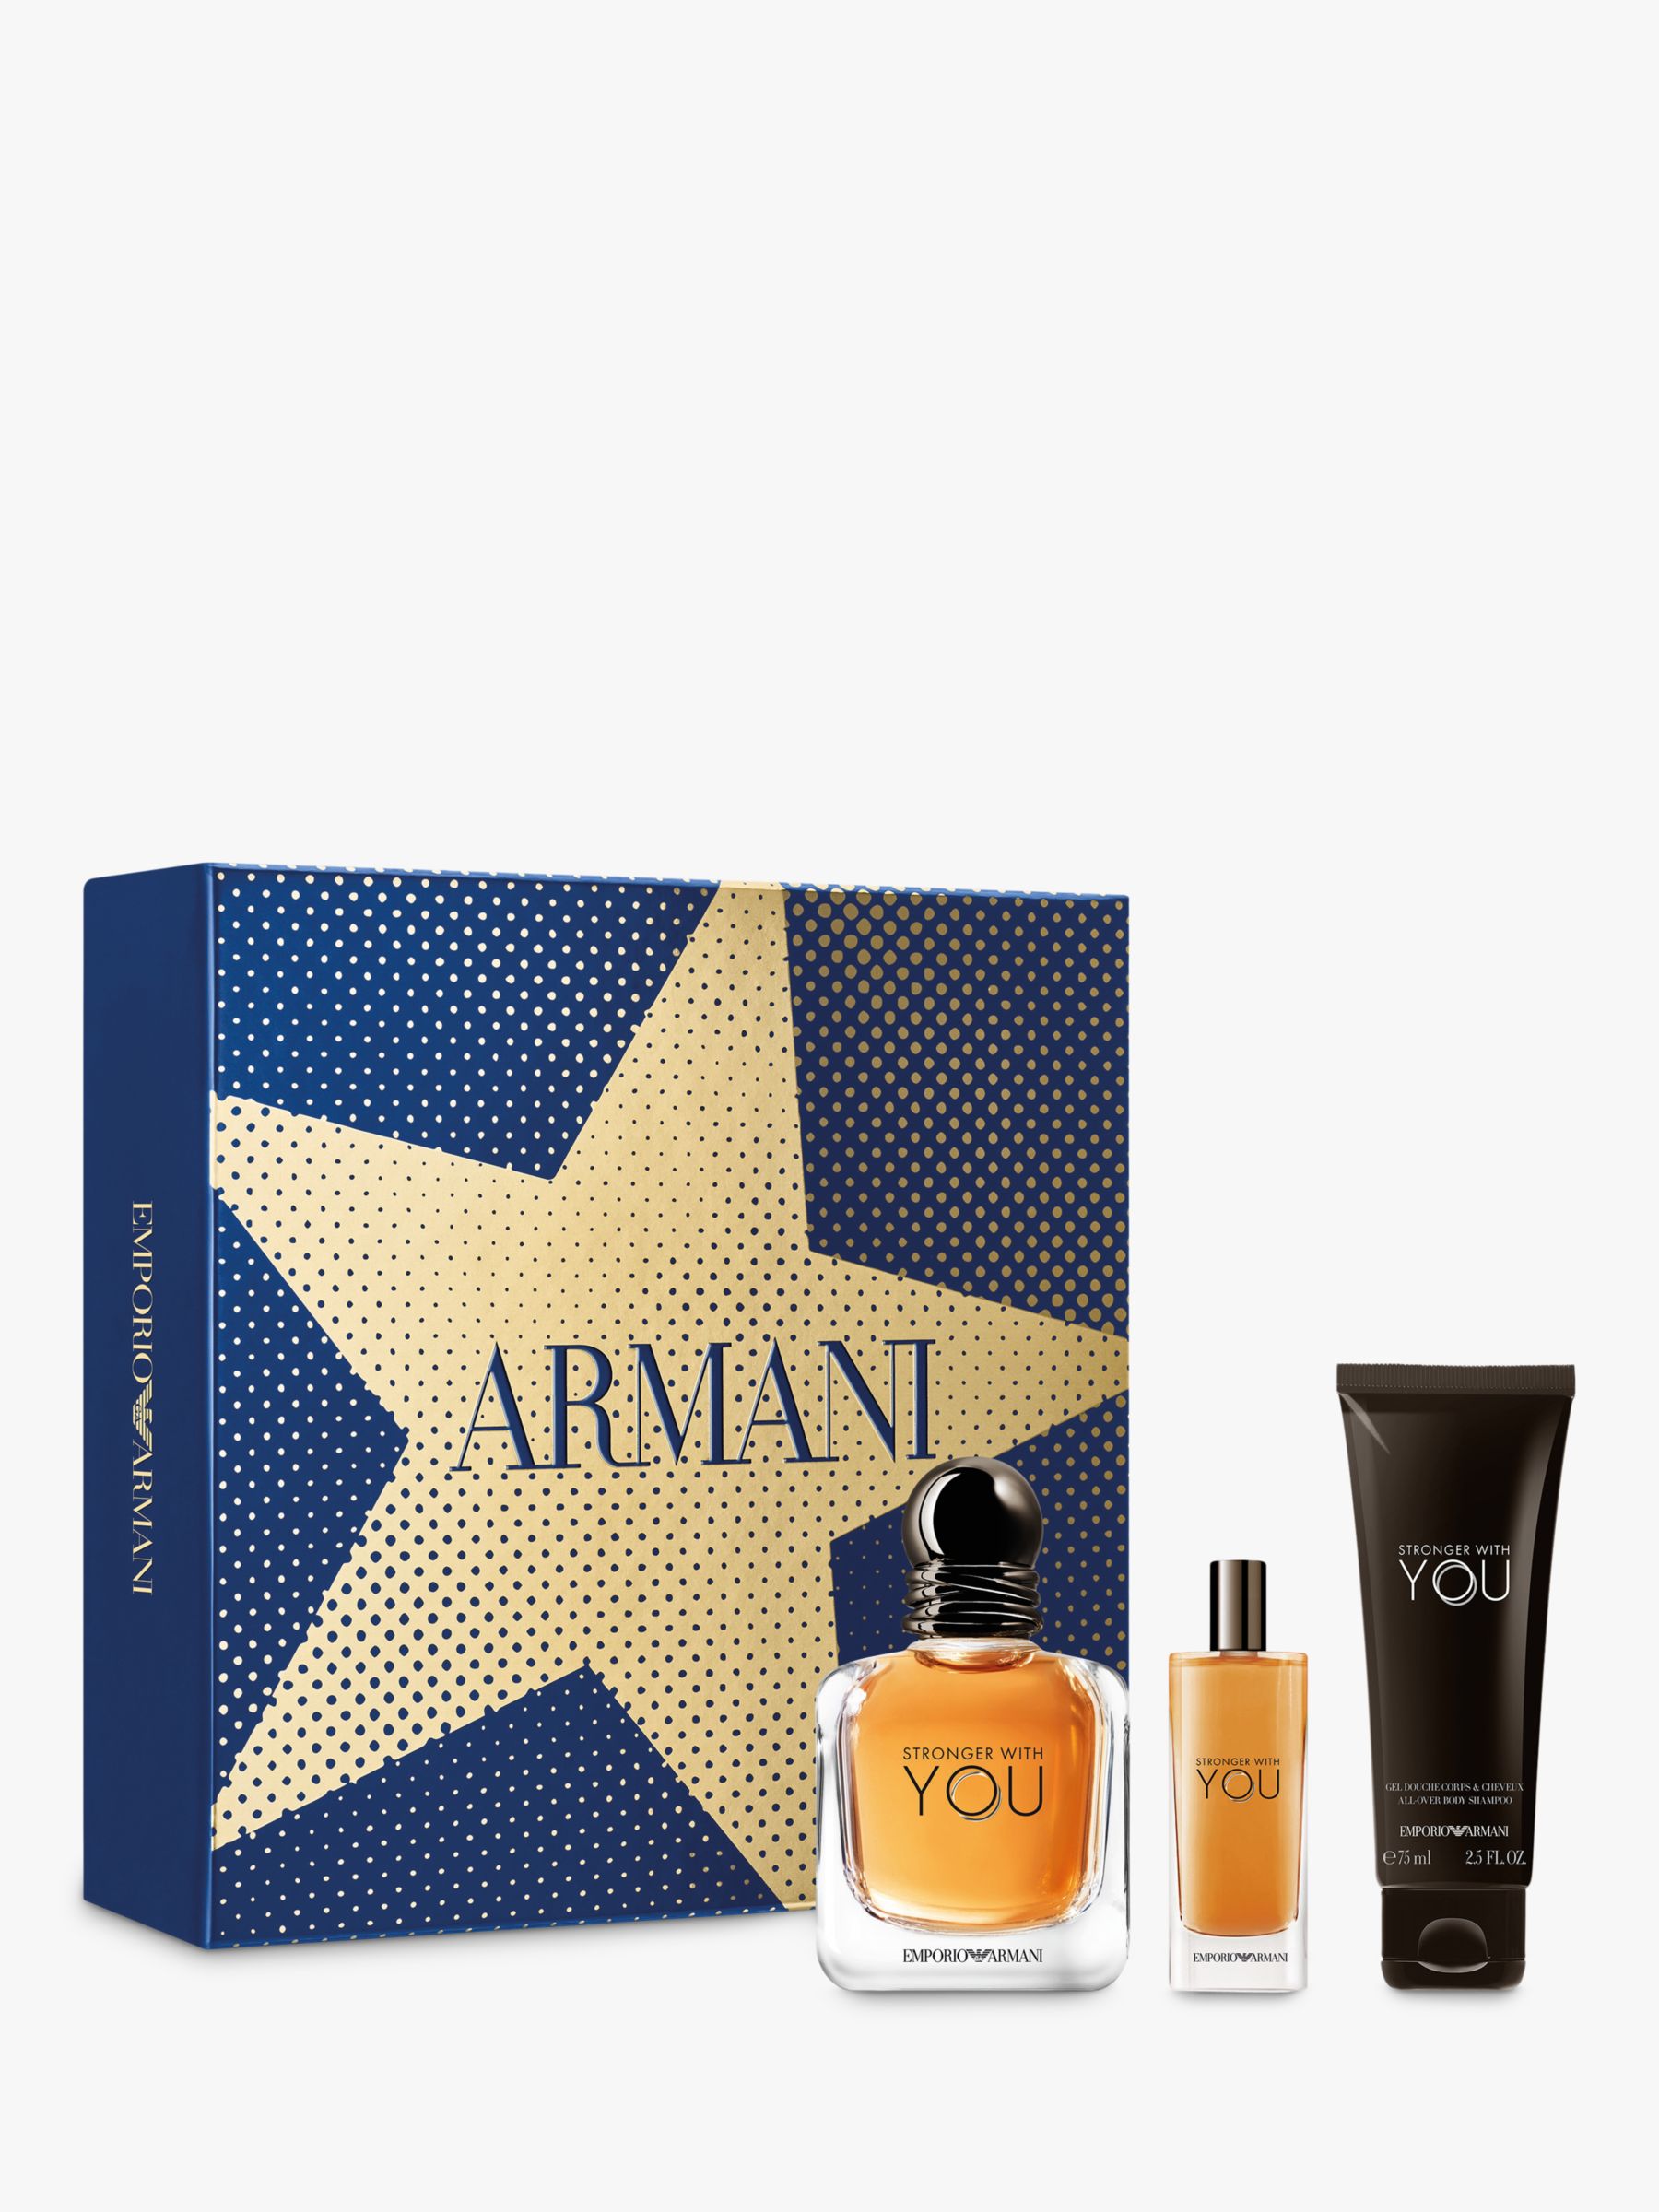 Emporio Armani Stronger With You For Men Eau de Toilette 50ml Fragrance  Gift Set